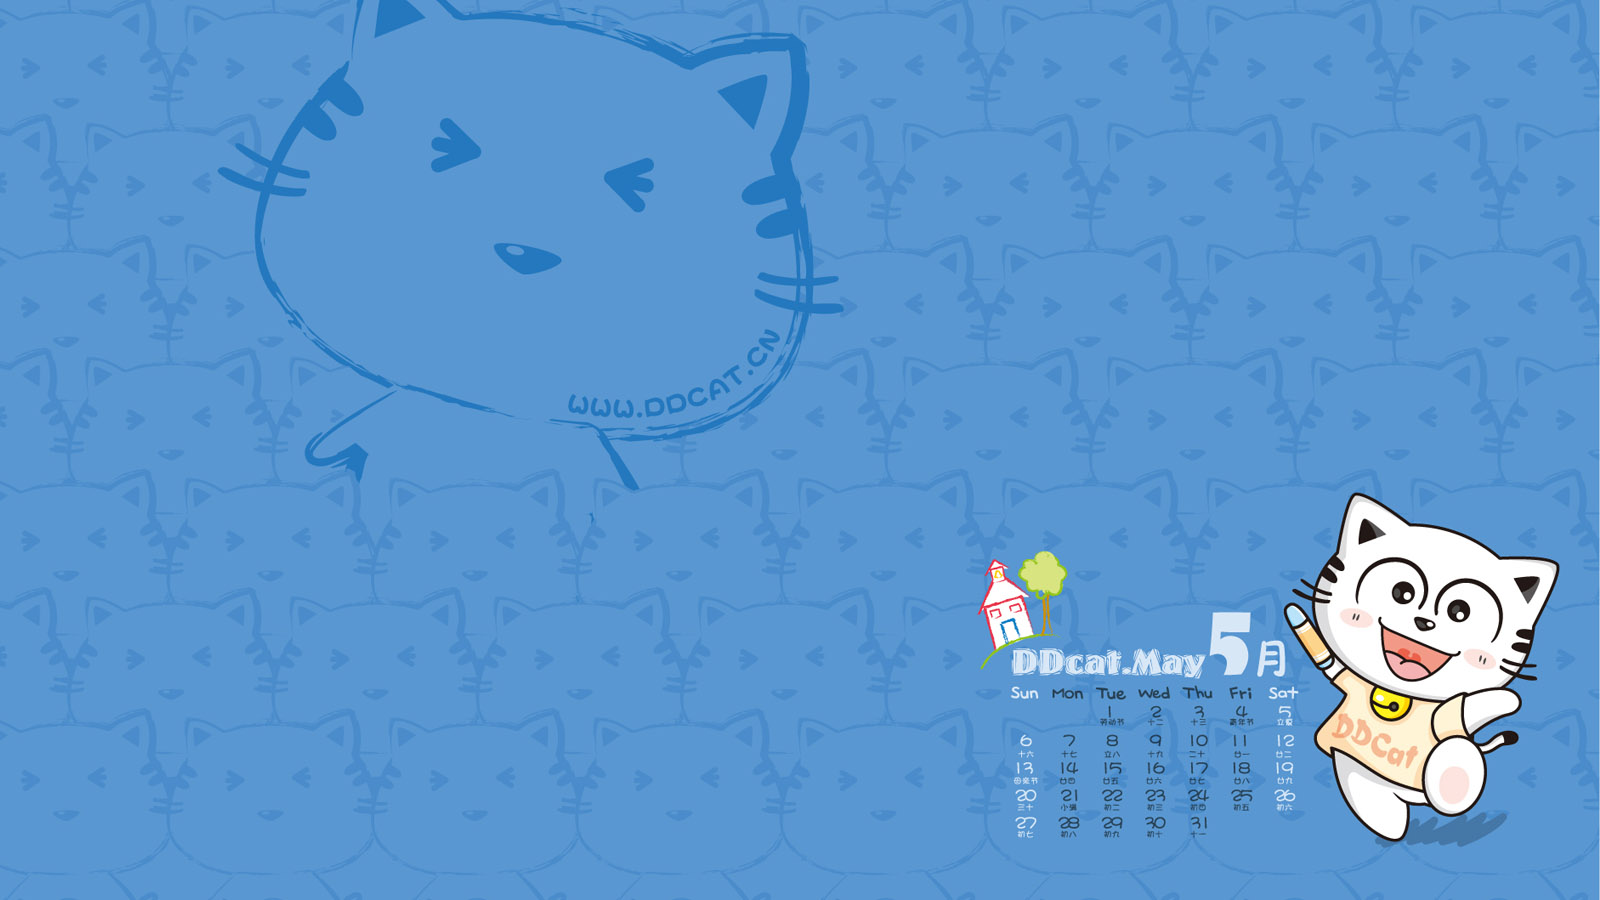 Ding Dong cat May 2012 calendar wallpaper